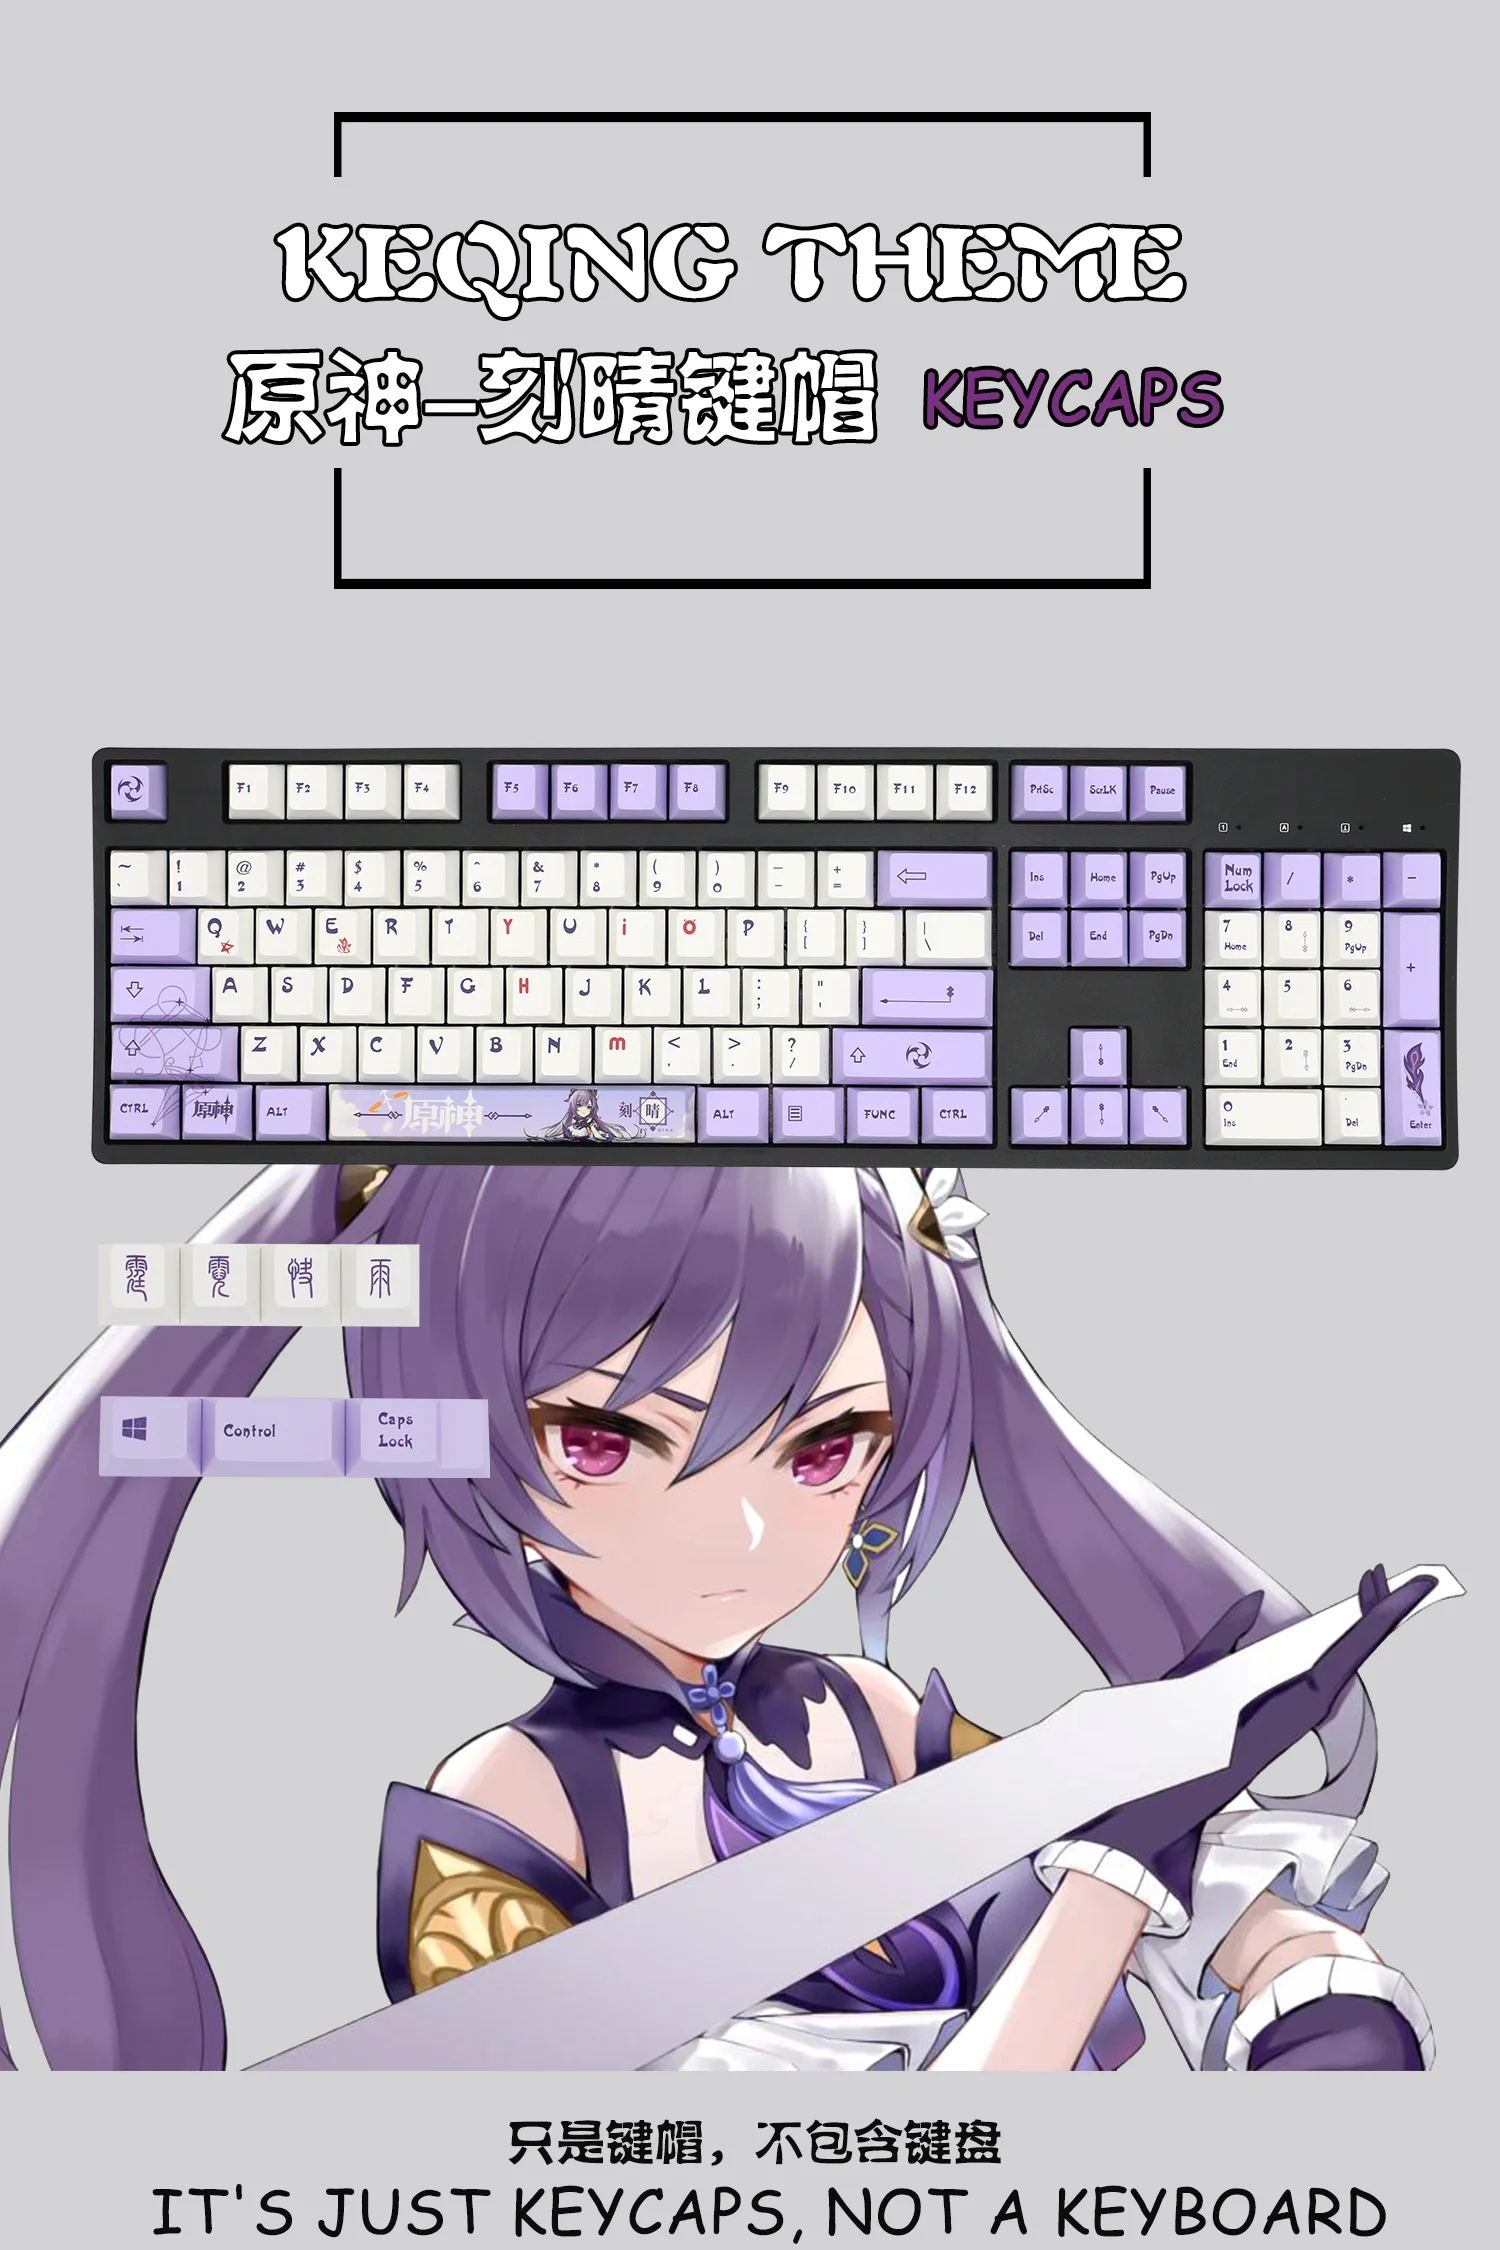 Haeae9b5628634d9aa2068b683dd814c0i - Anime Keycaps